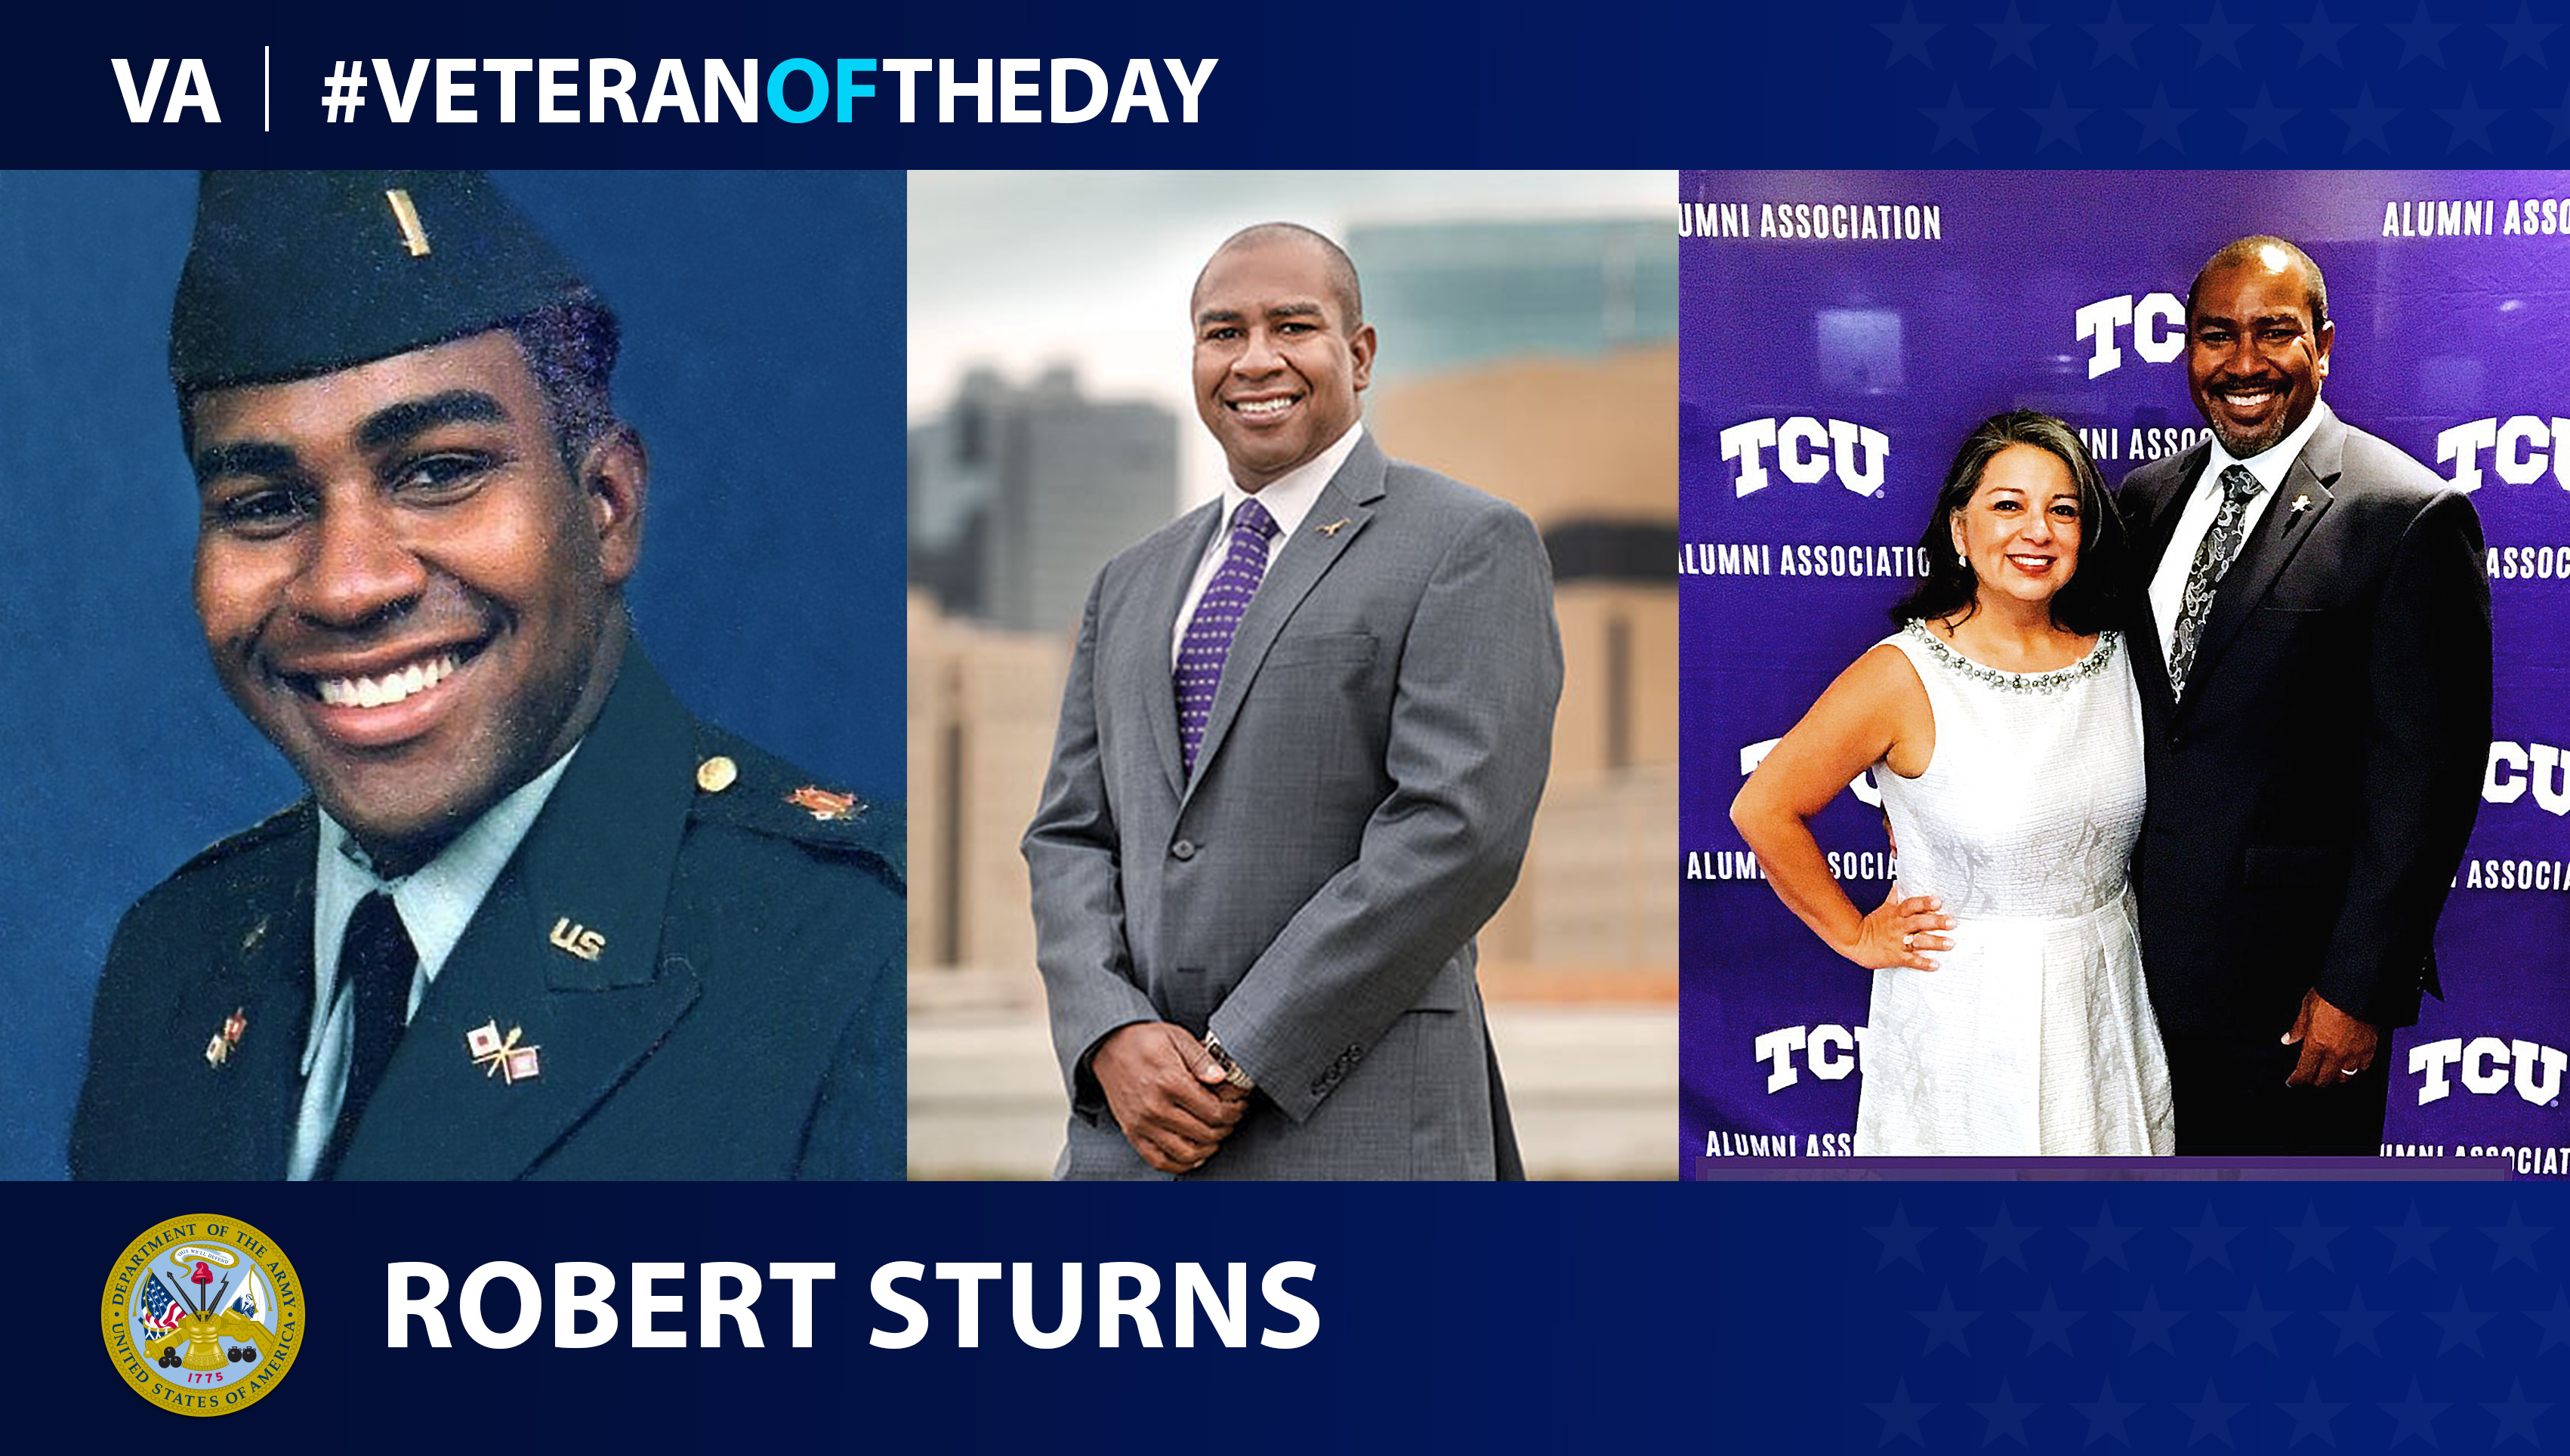 Army Veteran Robert Sturns is today's Veteran of the Day.